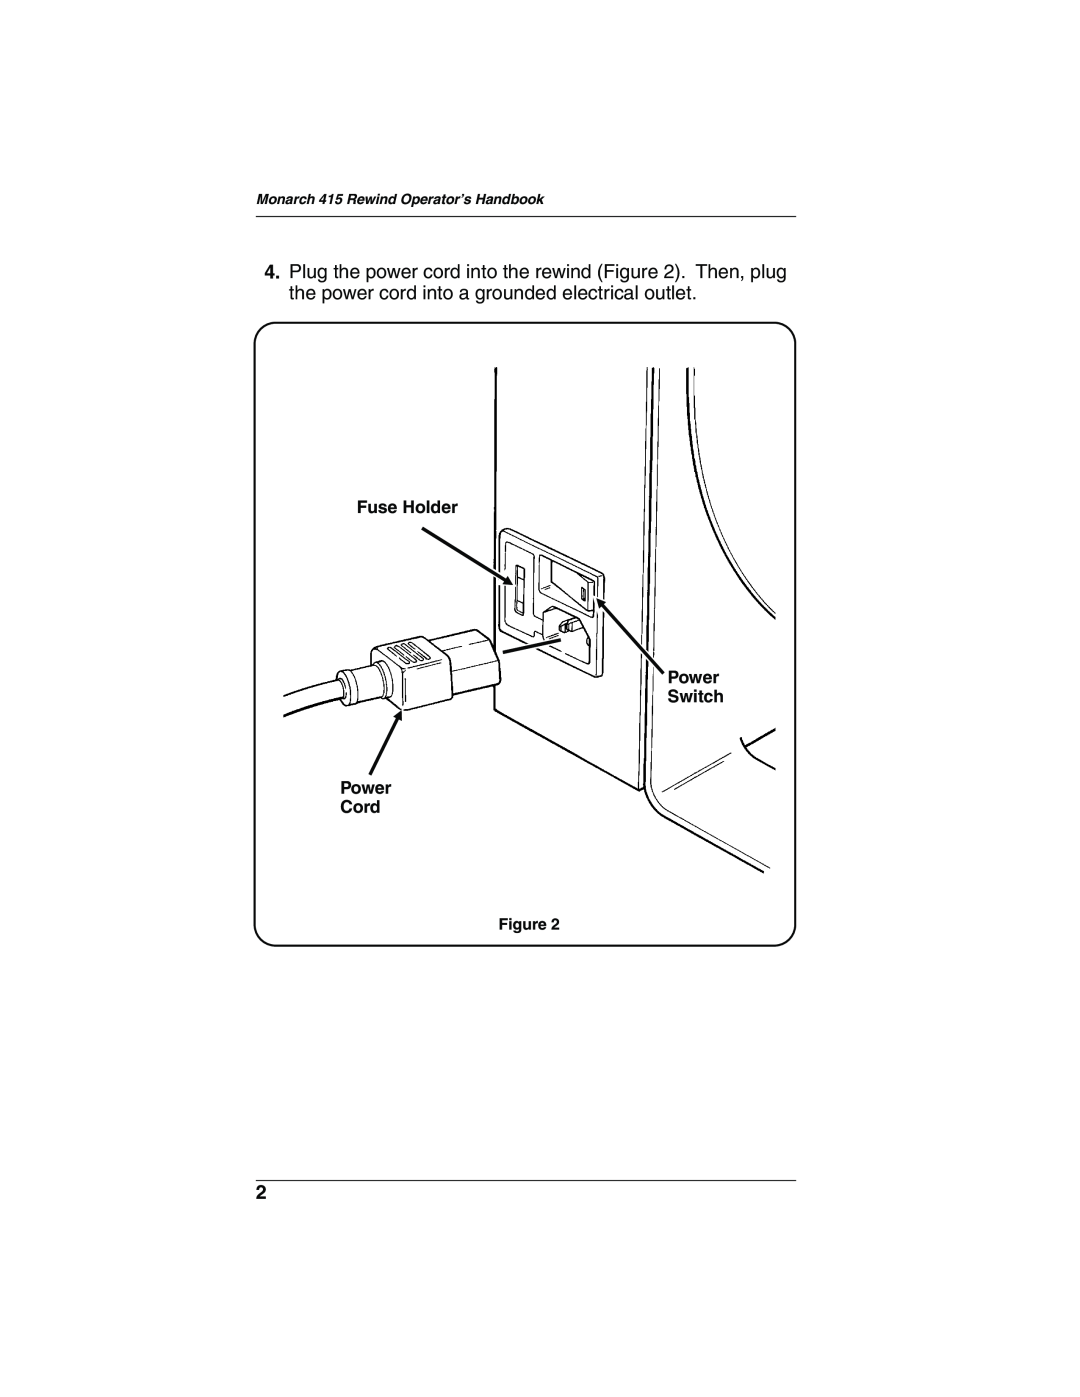 Paxar manual Fuse Holder Power Switch Power Cord, Monarch 415 Rewind Operator’s Handbook 